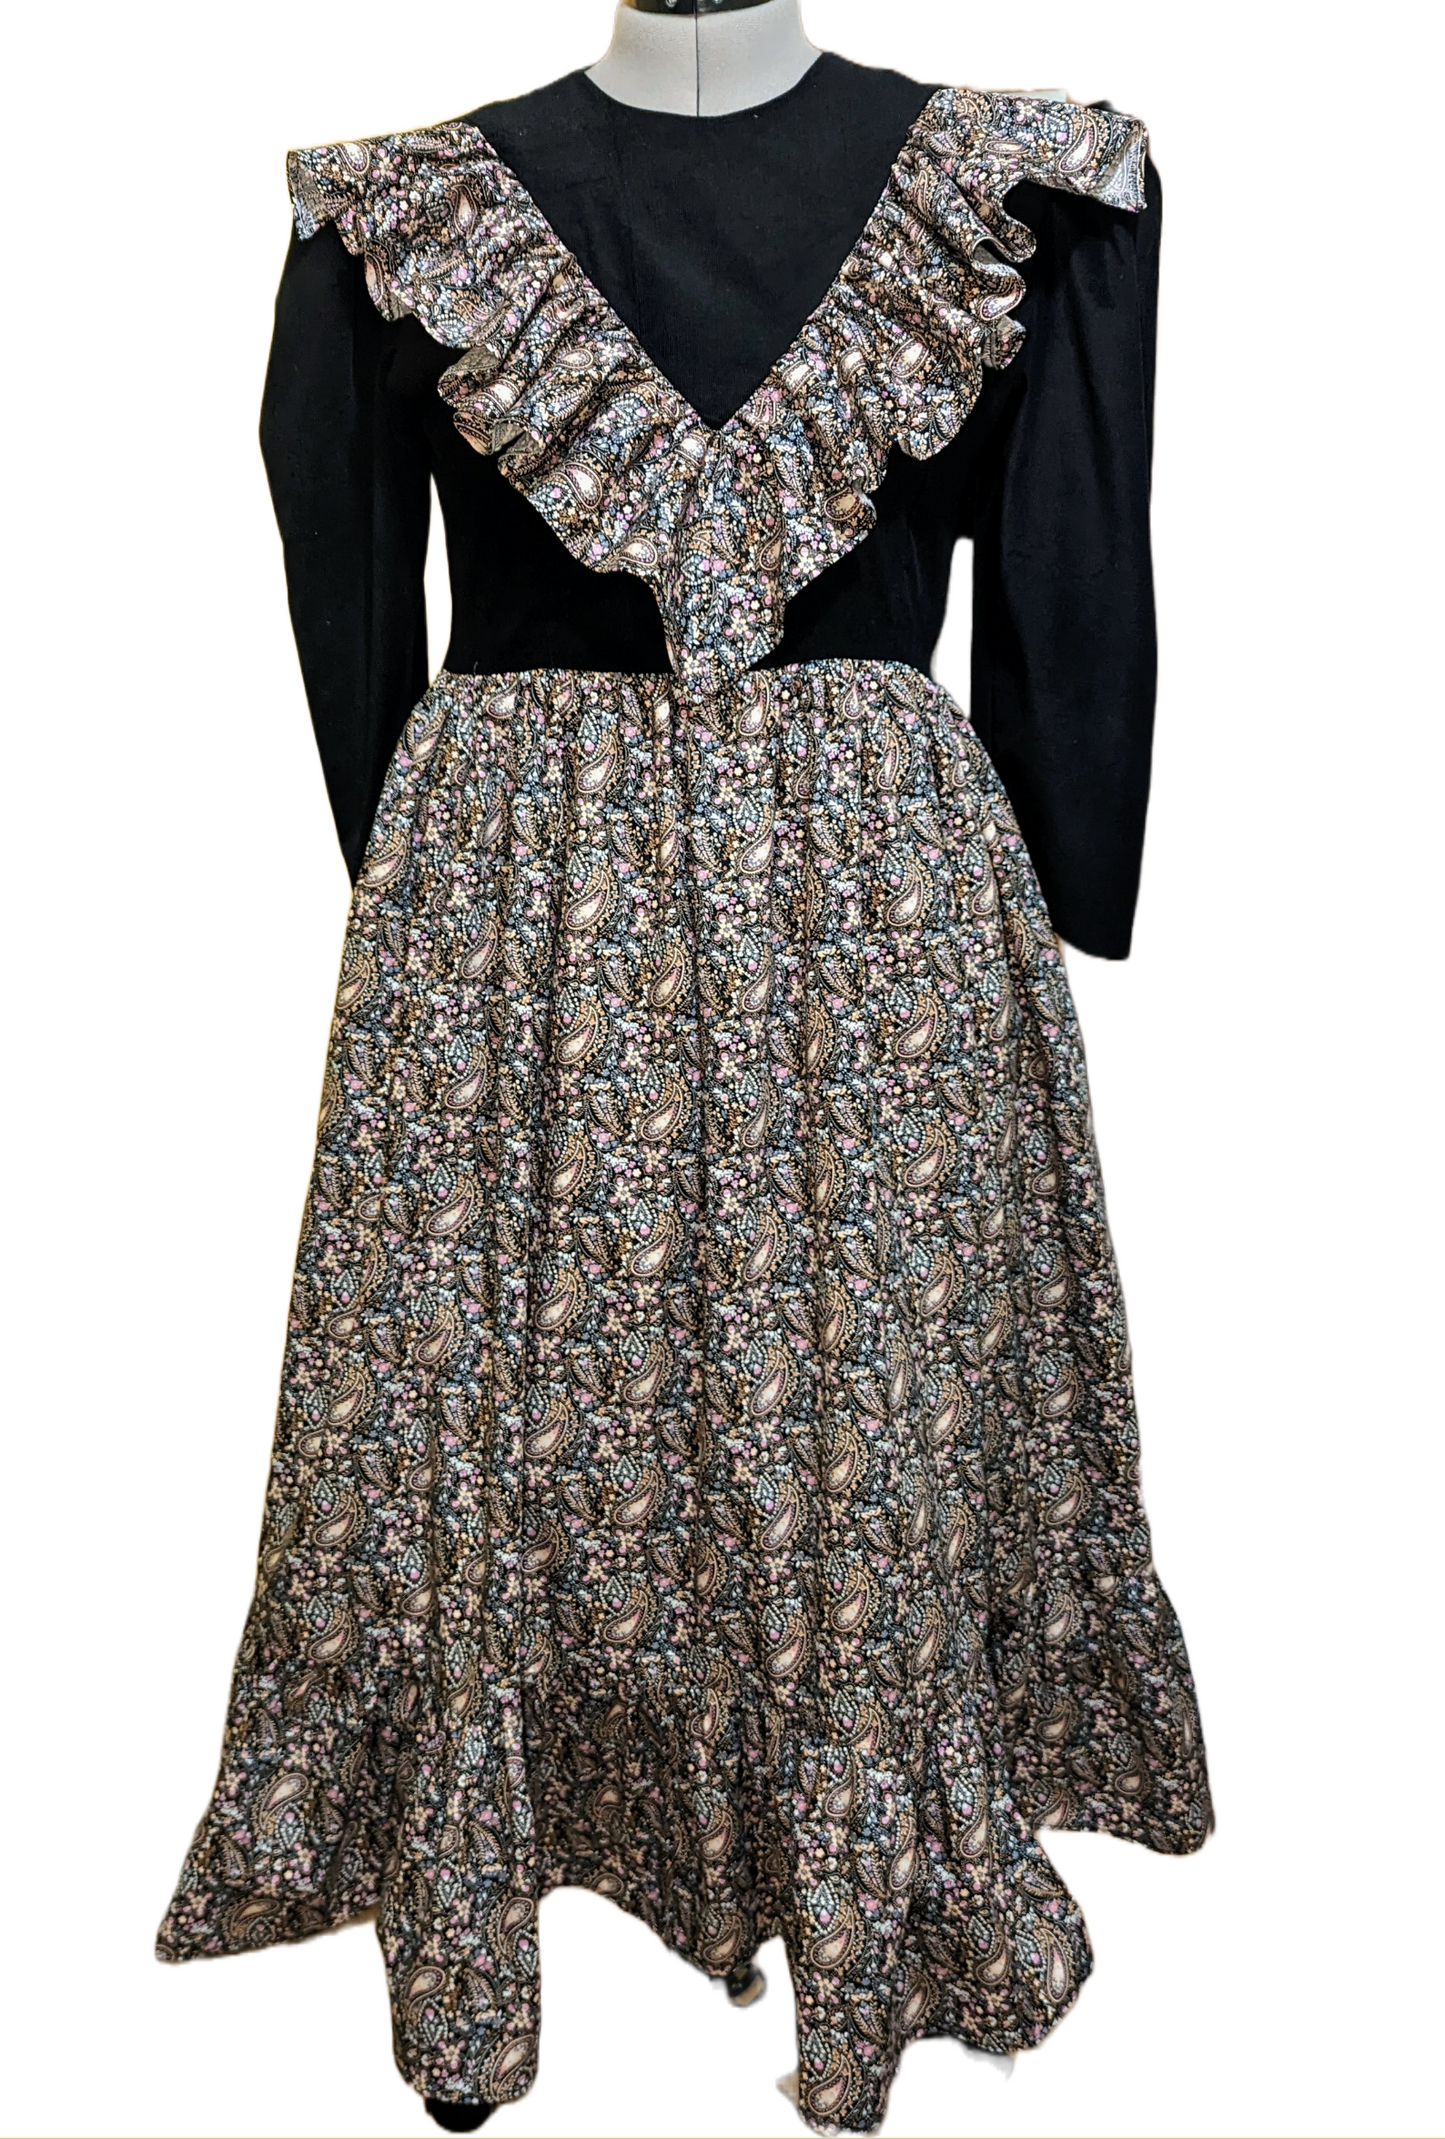 The Sophia Dress, Corduroy Vintage Dress